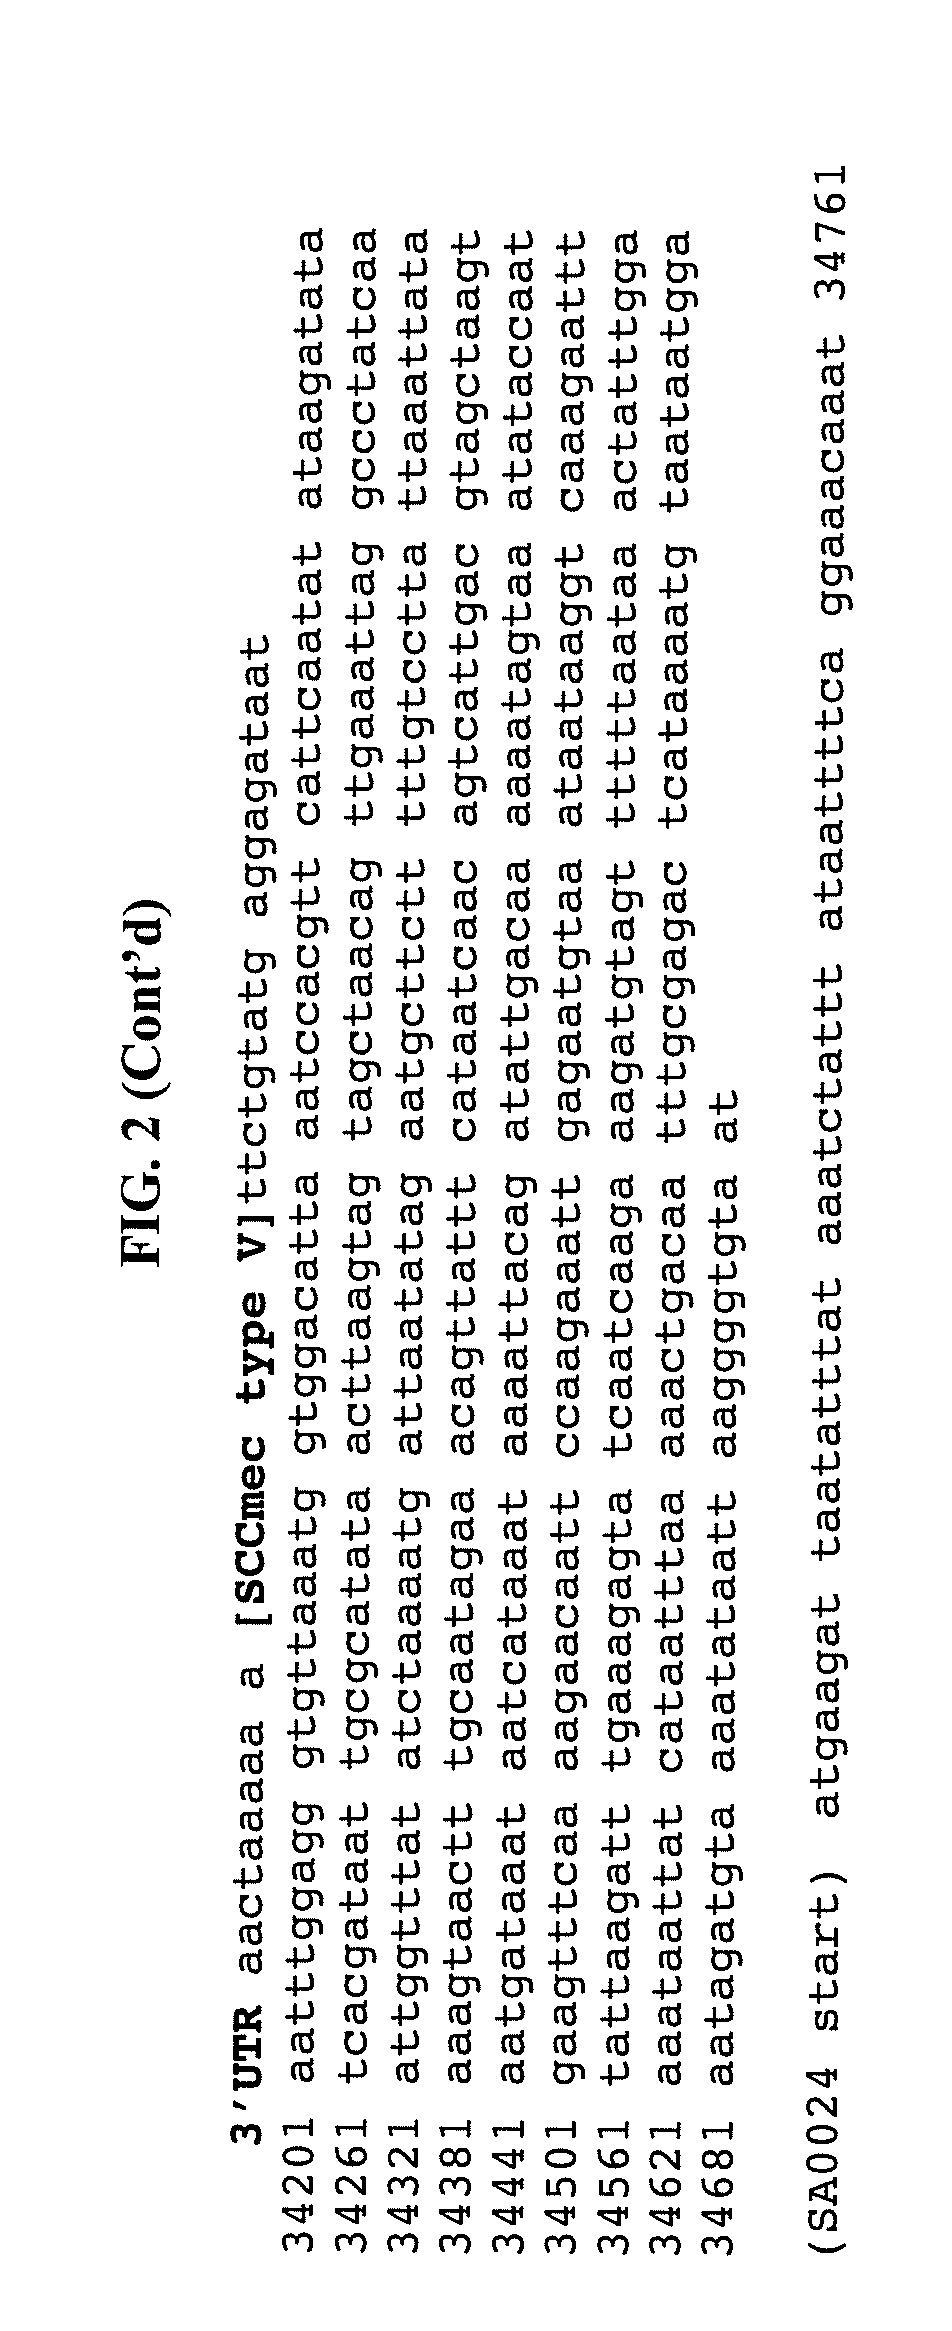 Method of determining types I, II, III, IV or V or methicillin-resistant Staphylococcus aureus (MRSA) in a biological sample